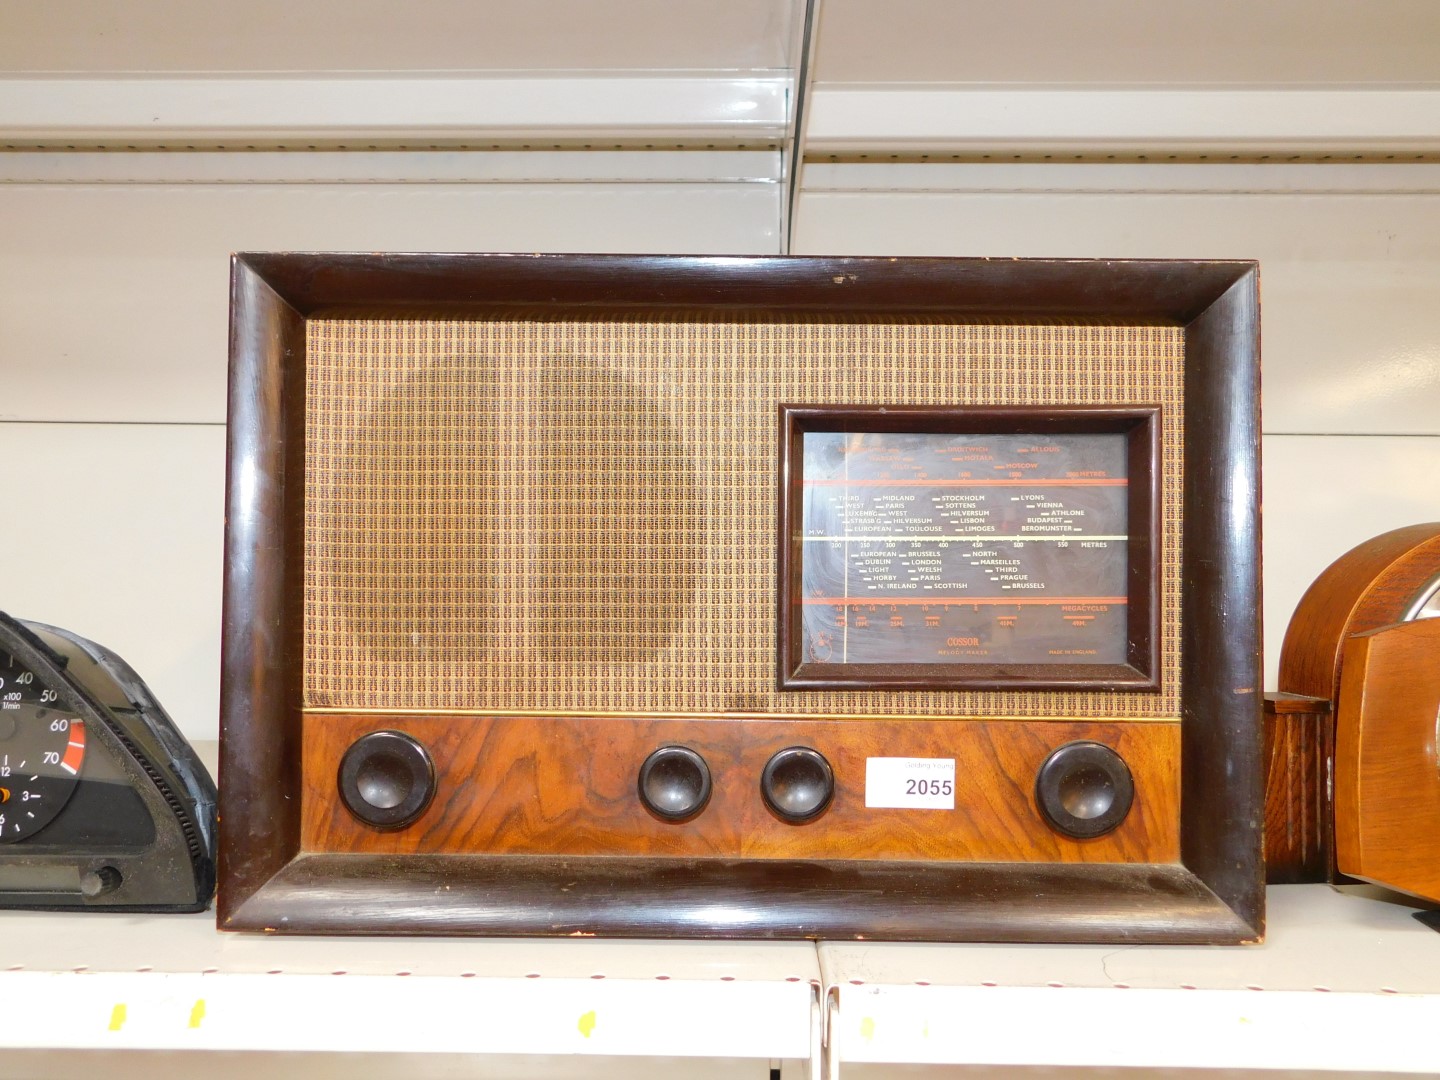 A Cossor Melody Maker walnut cased radio, model 520.